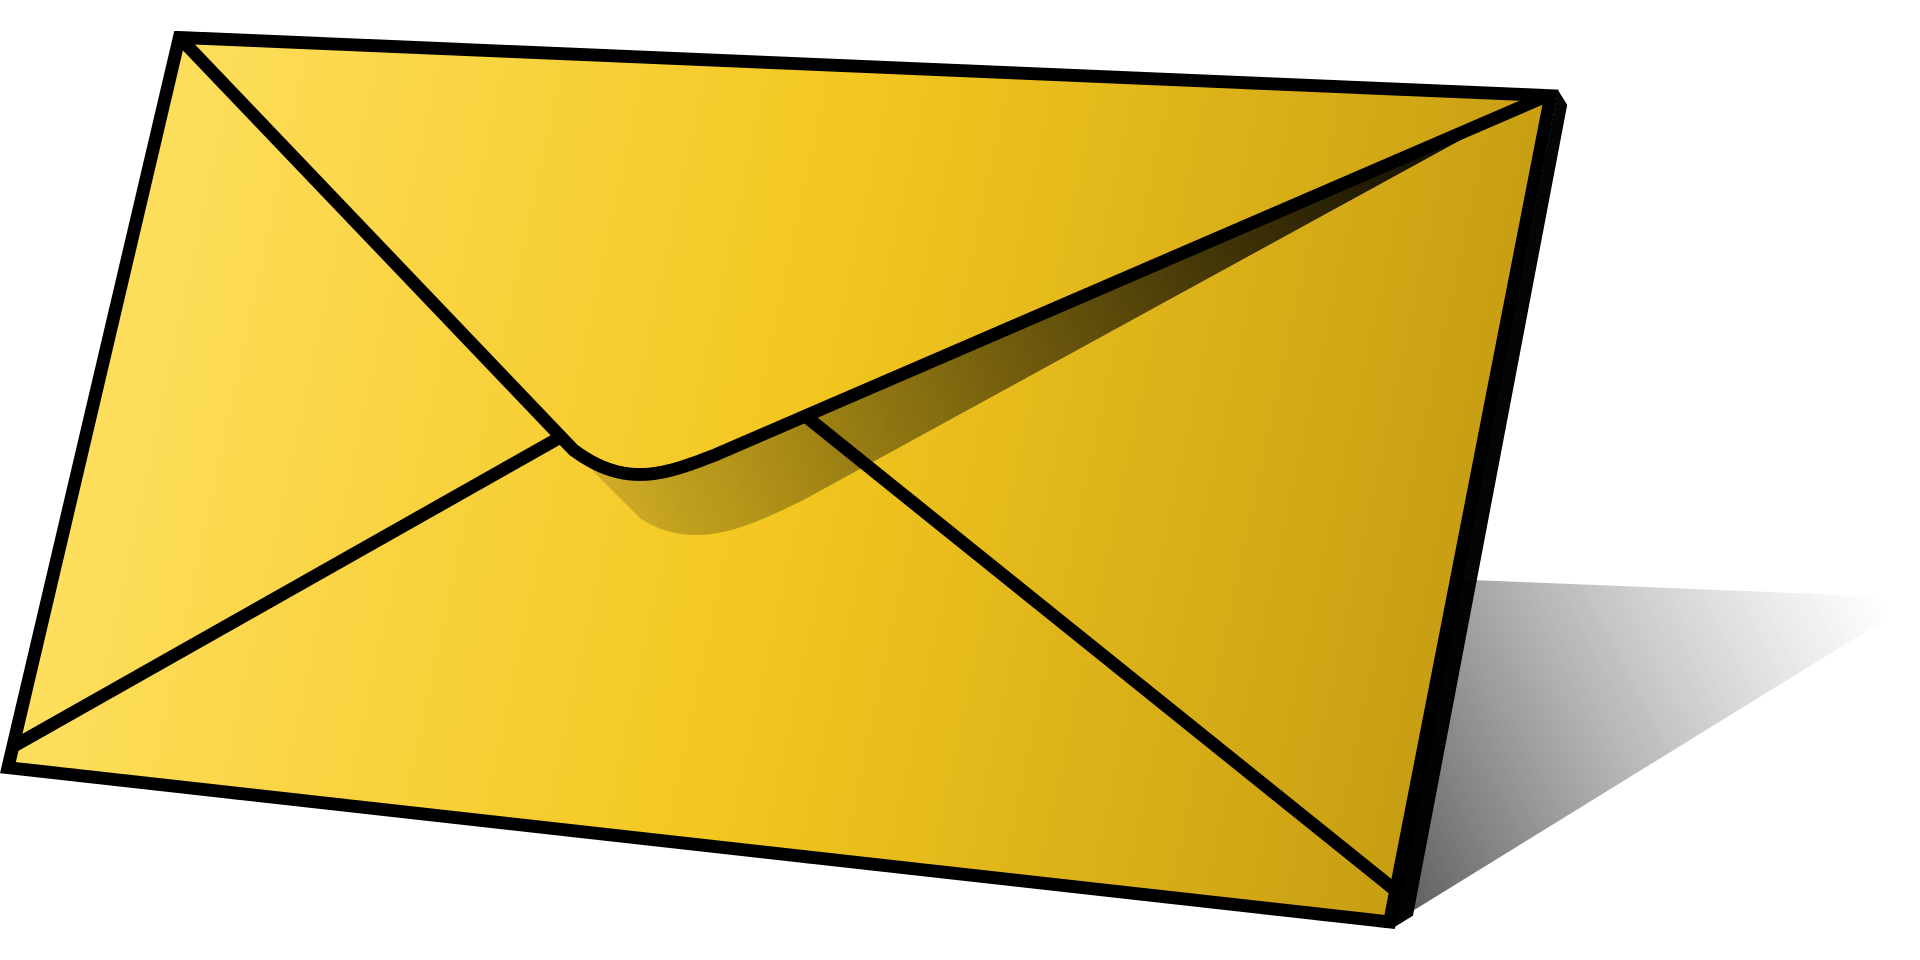 Envelope clipart rectangle object, Envelope rectangle object 